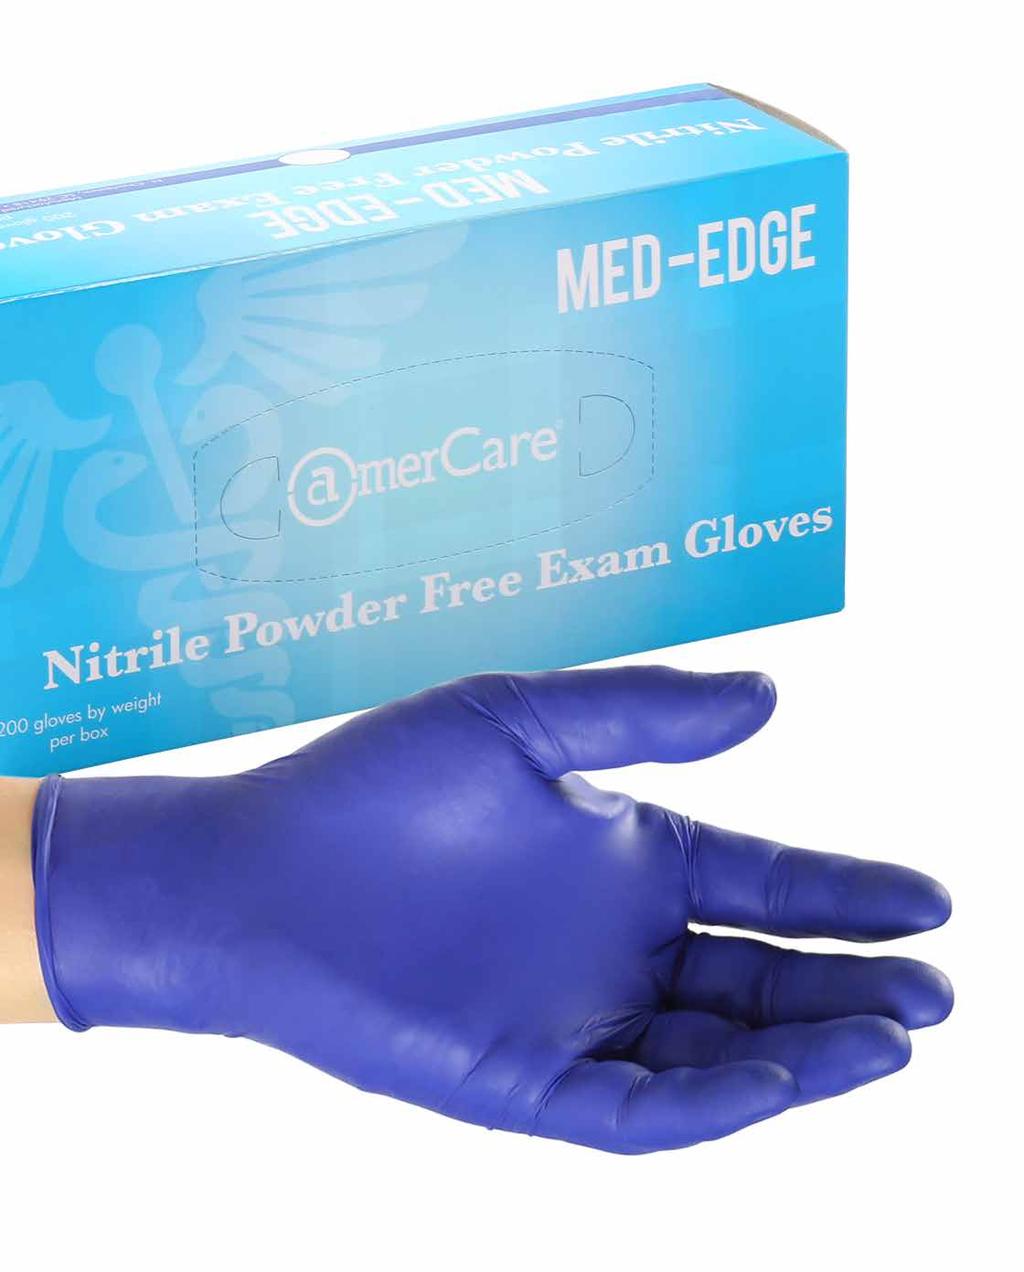 90 Black Rhino Powder Free Nitrile Gloves Sizes: S - XXL, 1,000 Gloves per Case, 900 Gloves per Case for the XX-Large, $10.09 per Box, Average Thickness: 6.